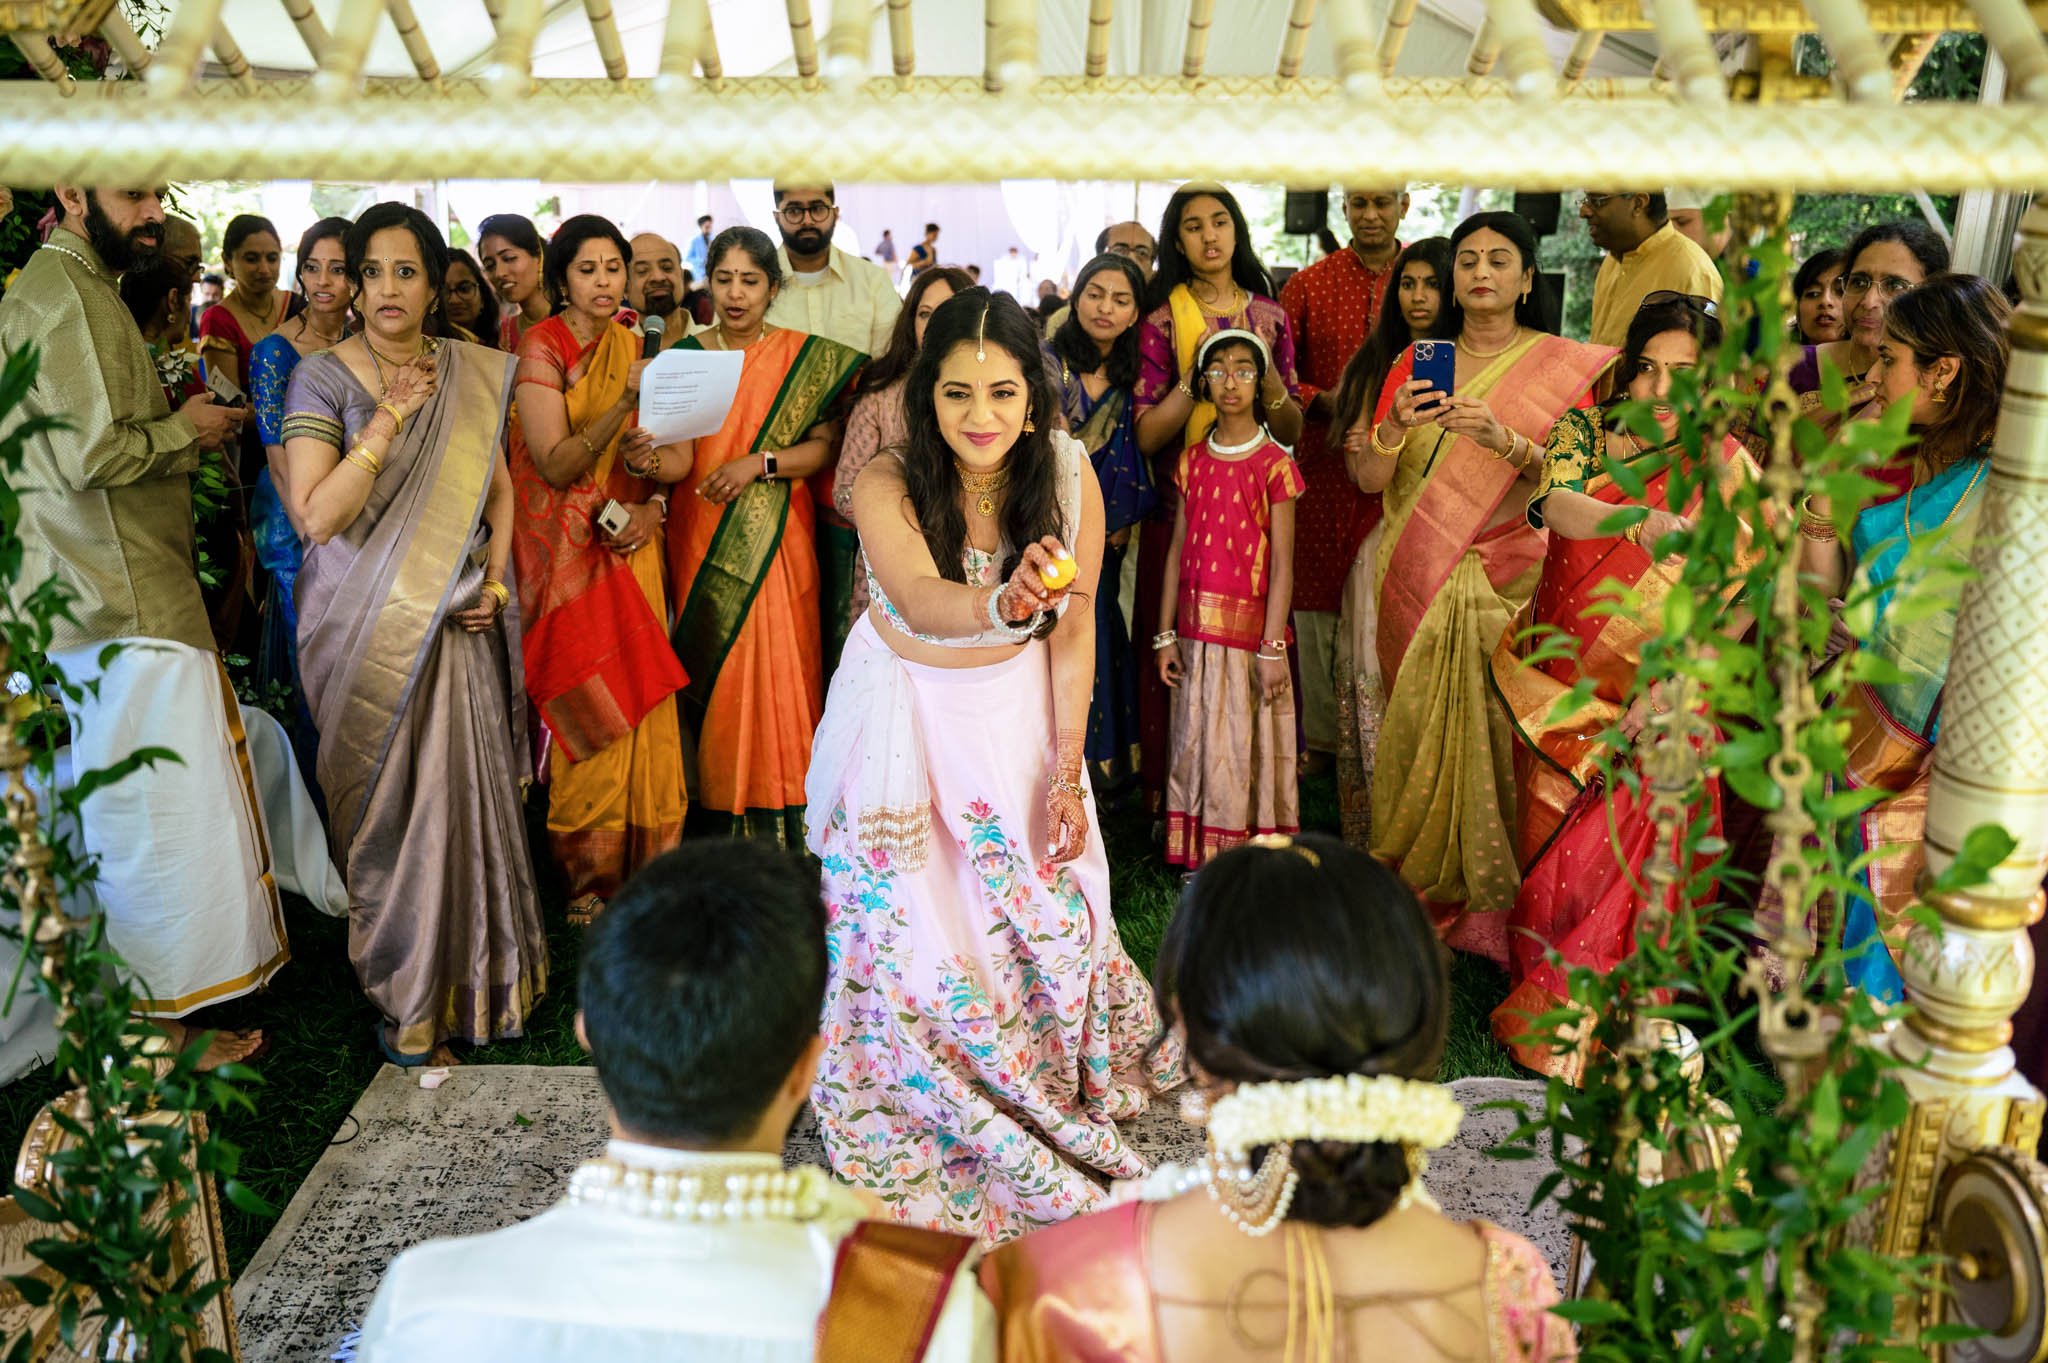 A lavish Indian wedding ceremony at the Biltmore Estate.